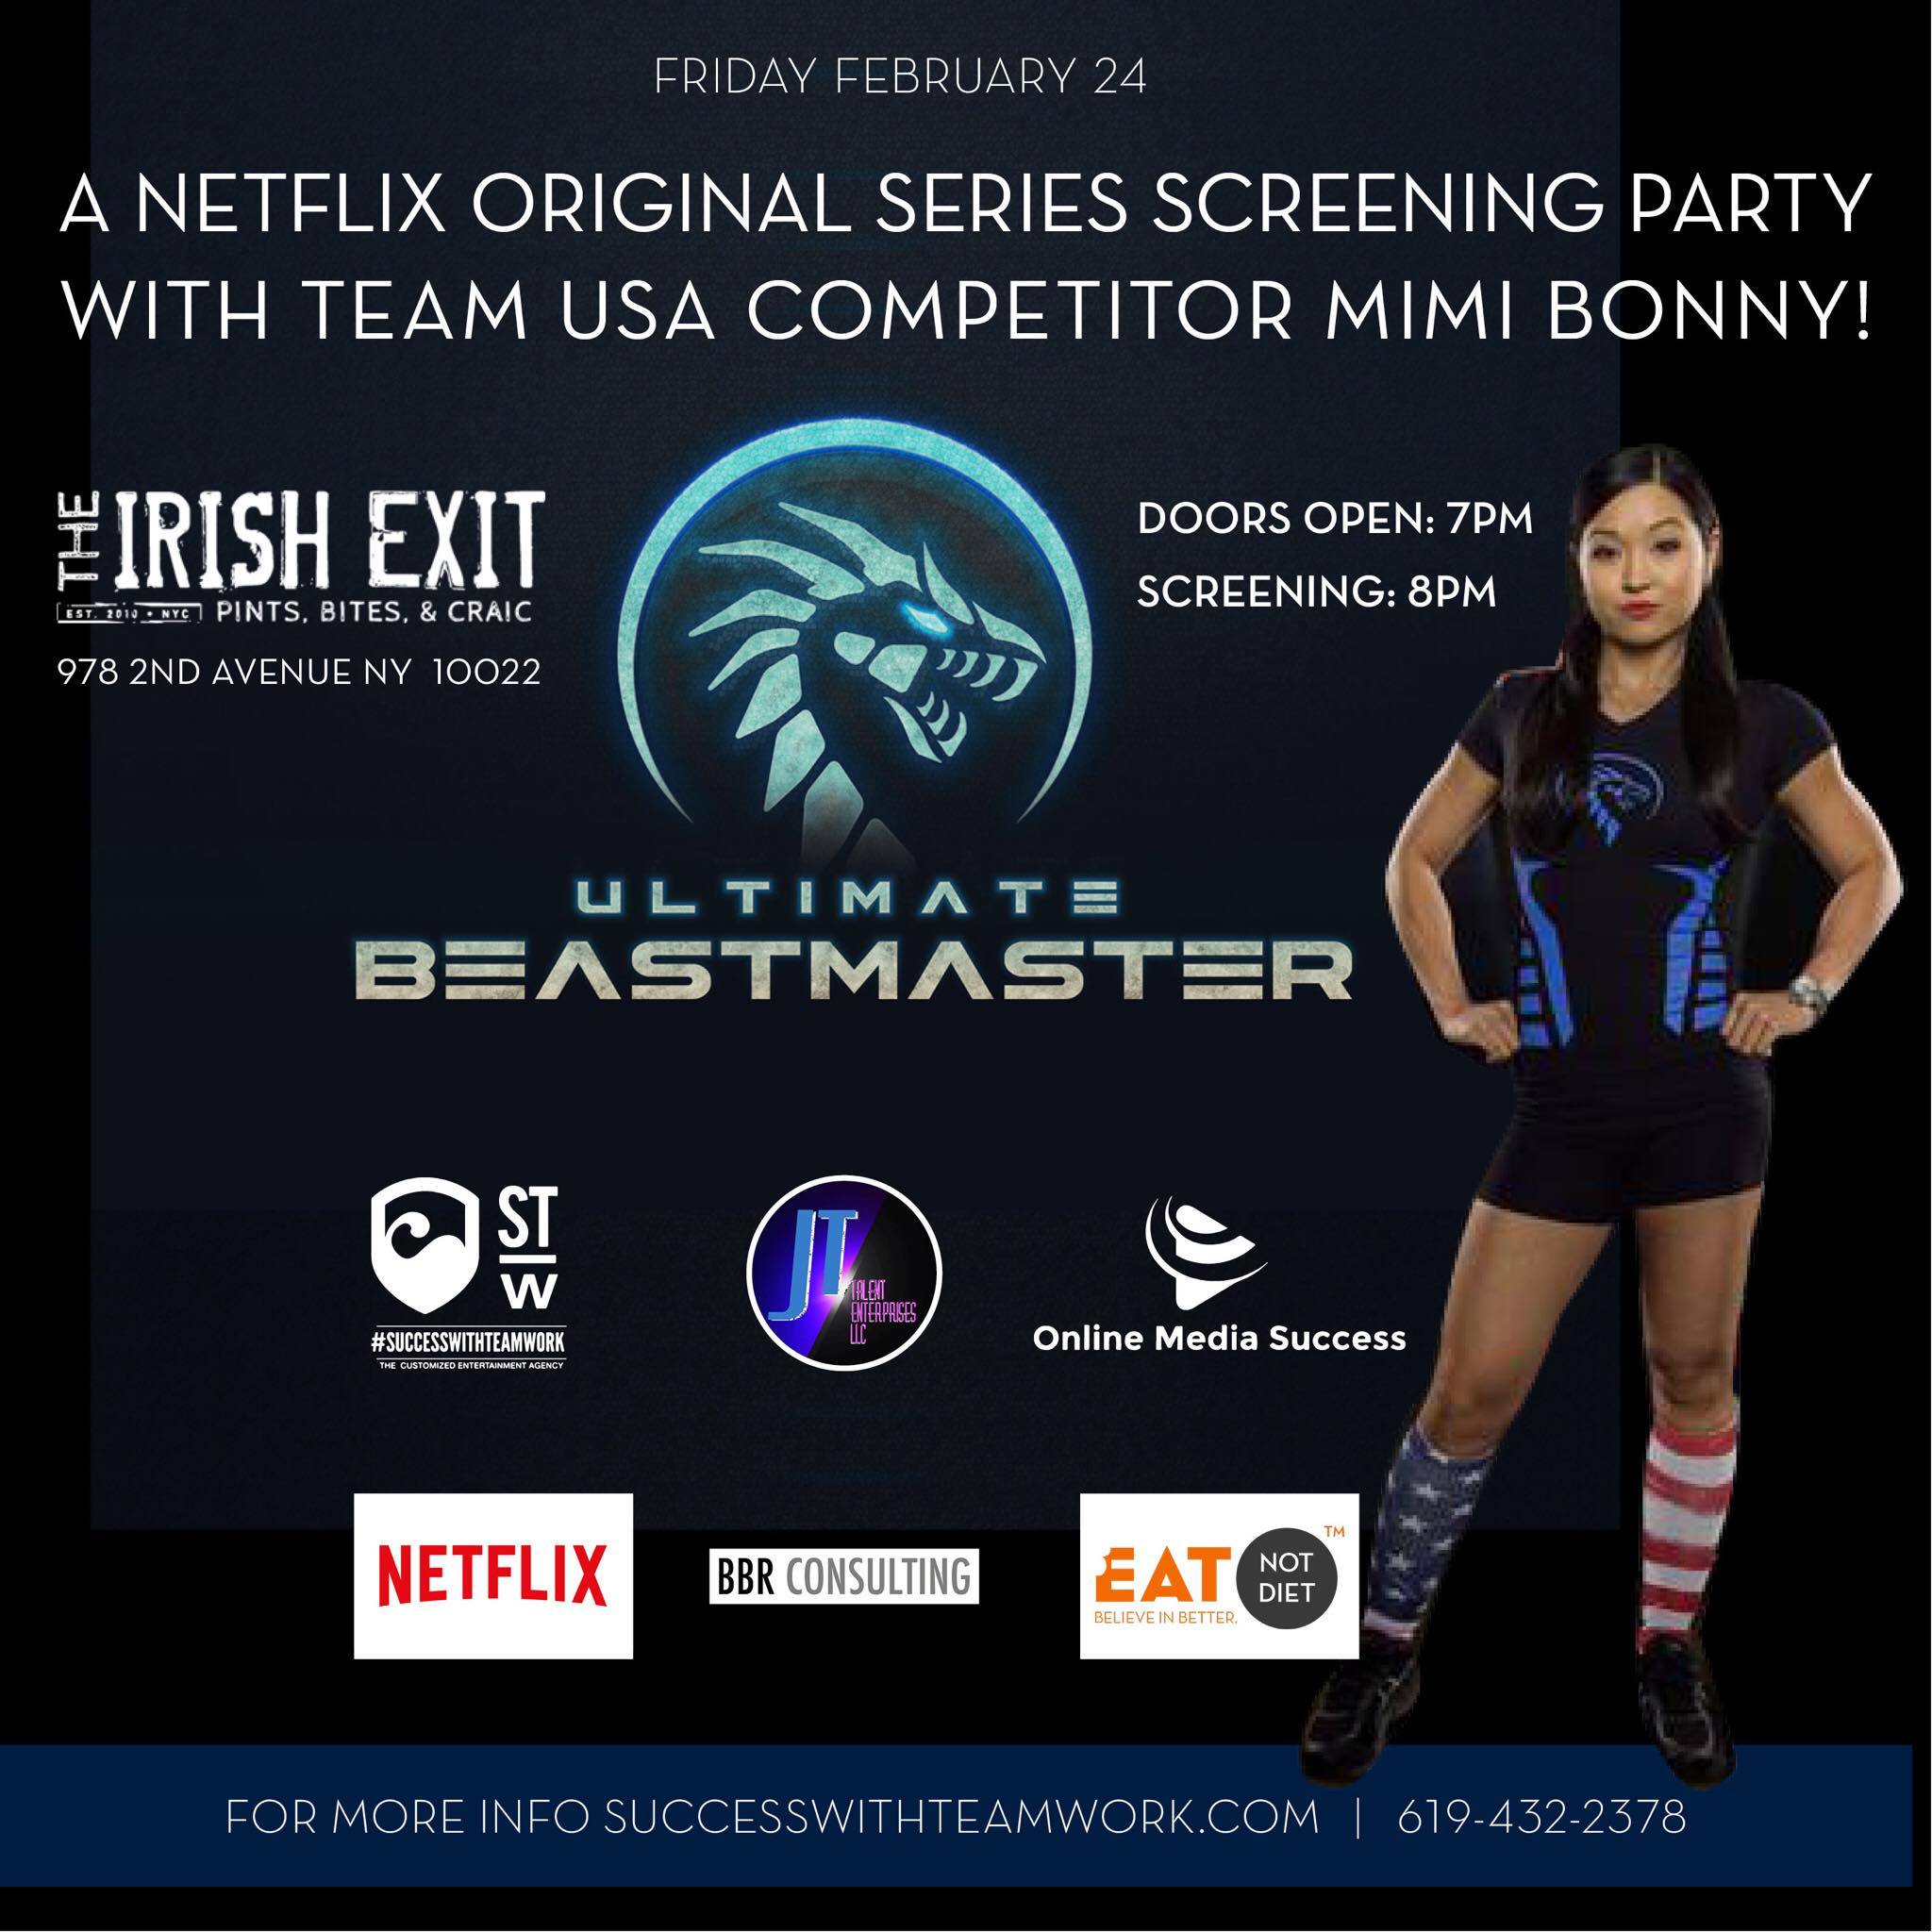 Netflix Original Series "Ultimate Beastmaster" Screening & Party